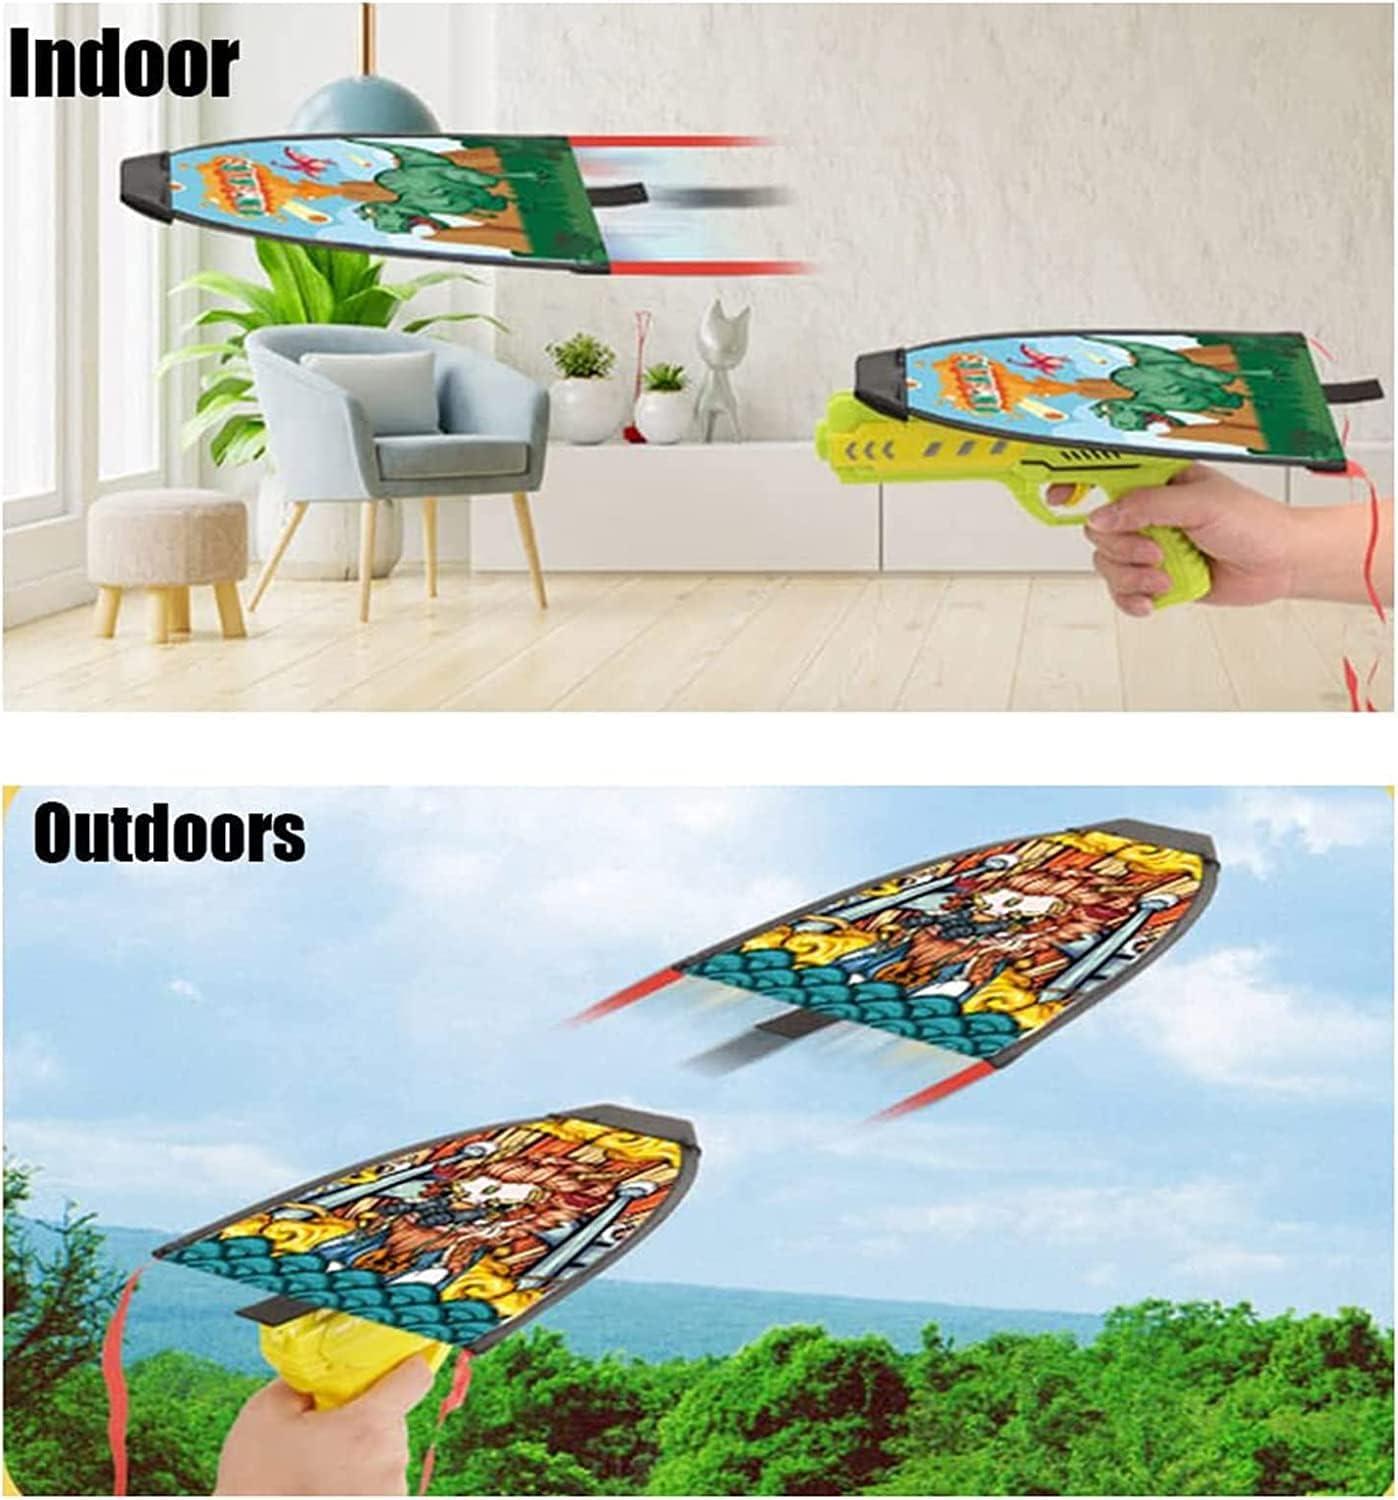 Kite Launcher Toys - Funny Beach Kite Toy Outdoor Toys For Kids